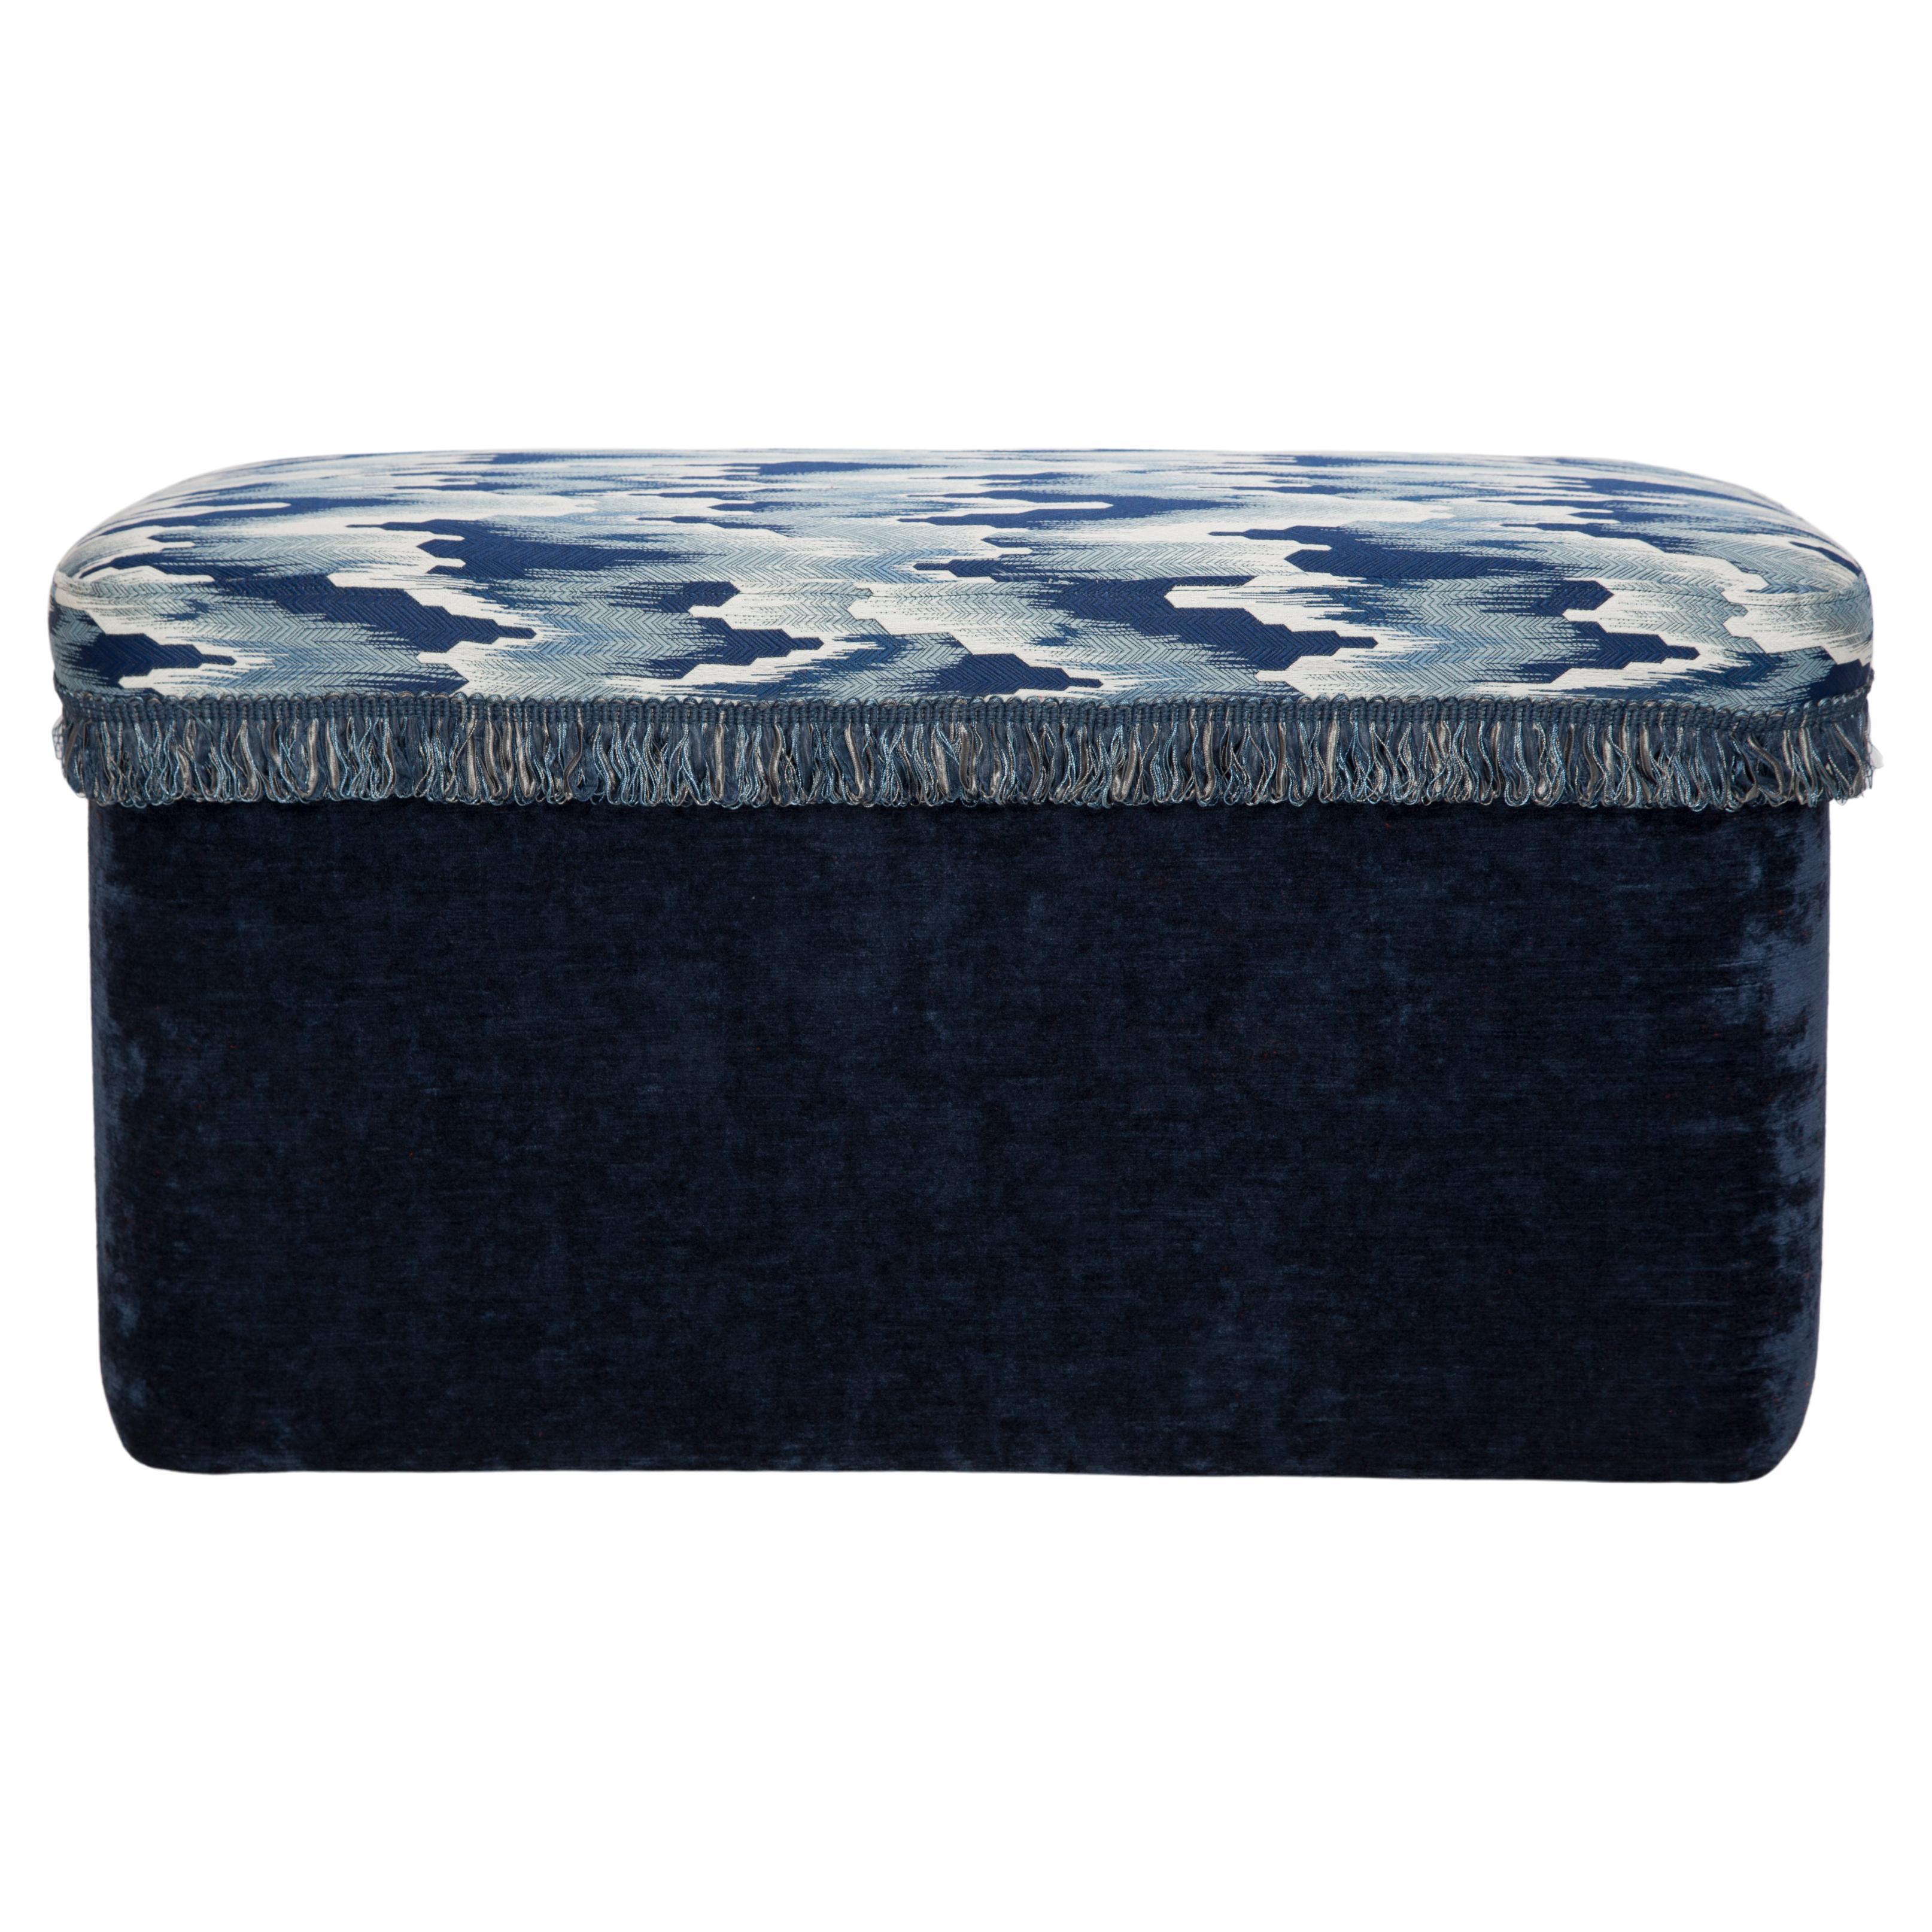 Bench Pouffe with Box, Blue Fandango Jacquard, by Vintola Studio, Europe, Poland For Sale